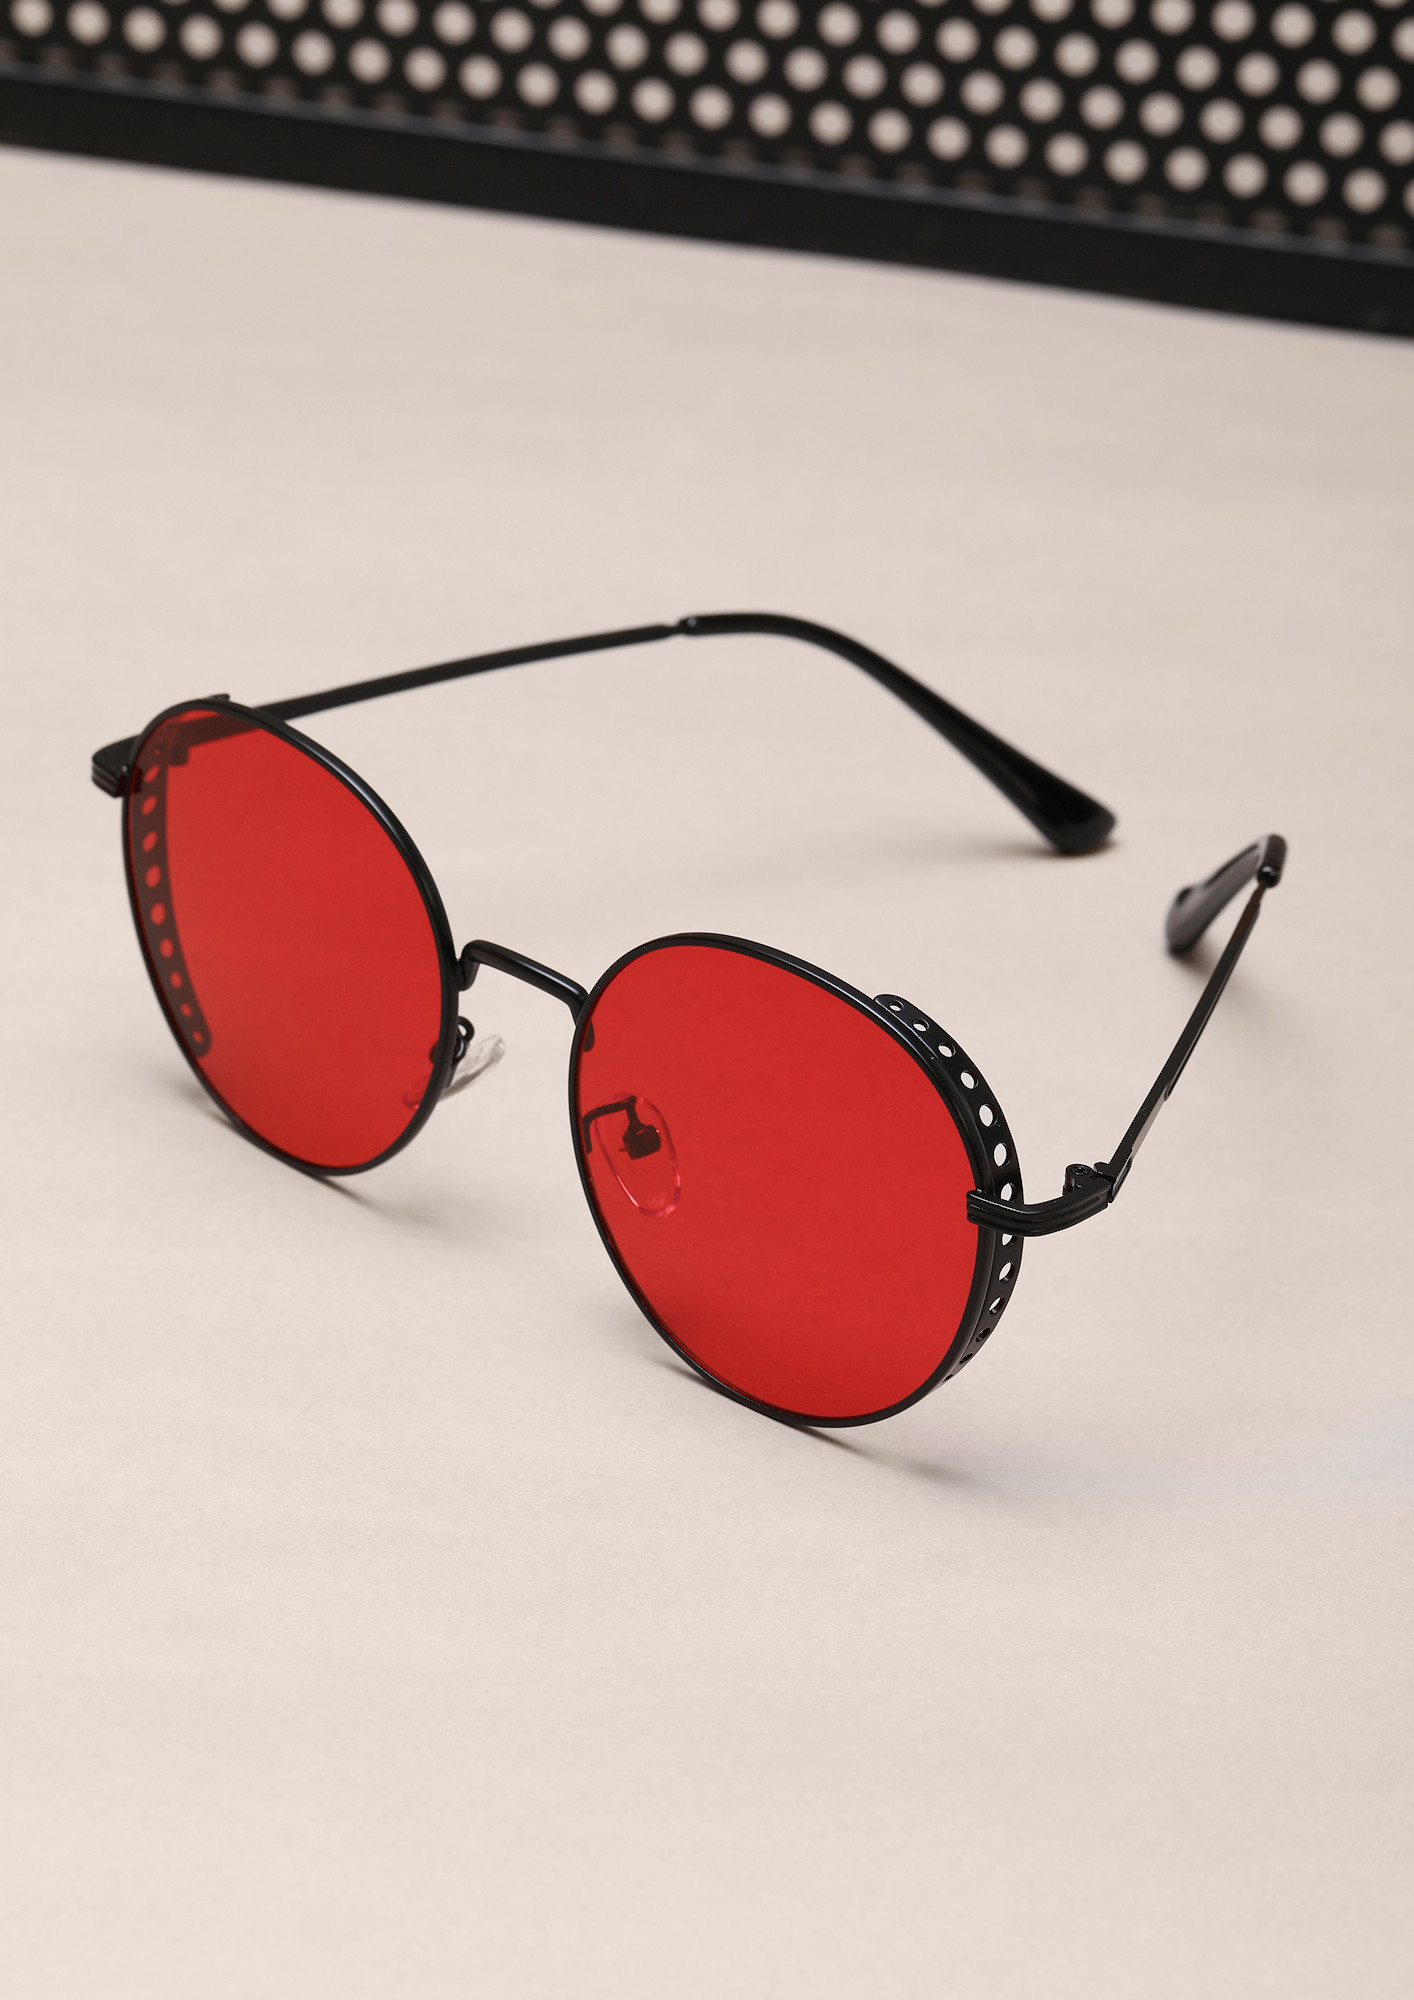 Buy 205179 Full-Rim Round Sunglasses Online at Best Prices in India -  JioMart.